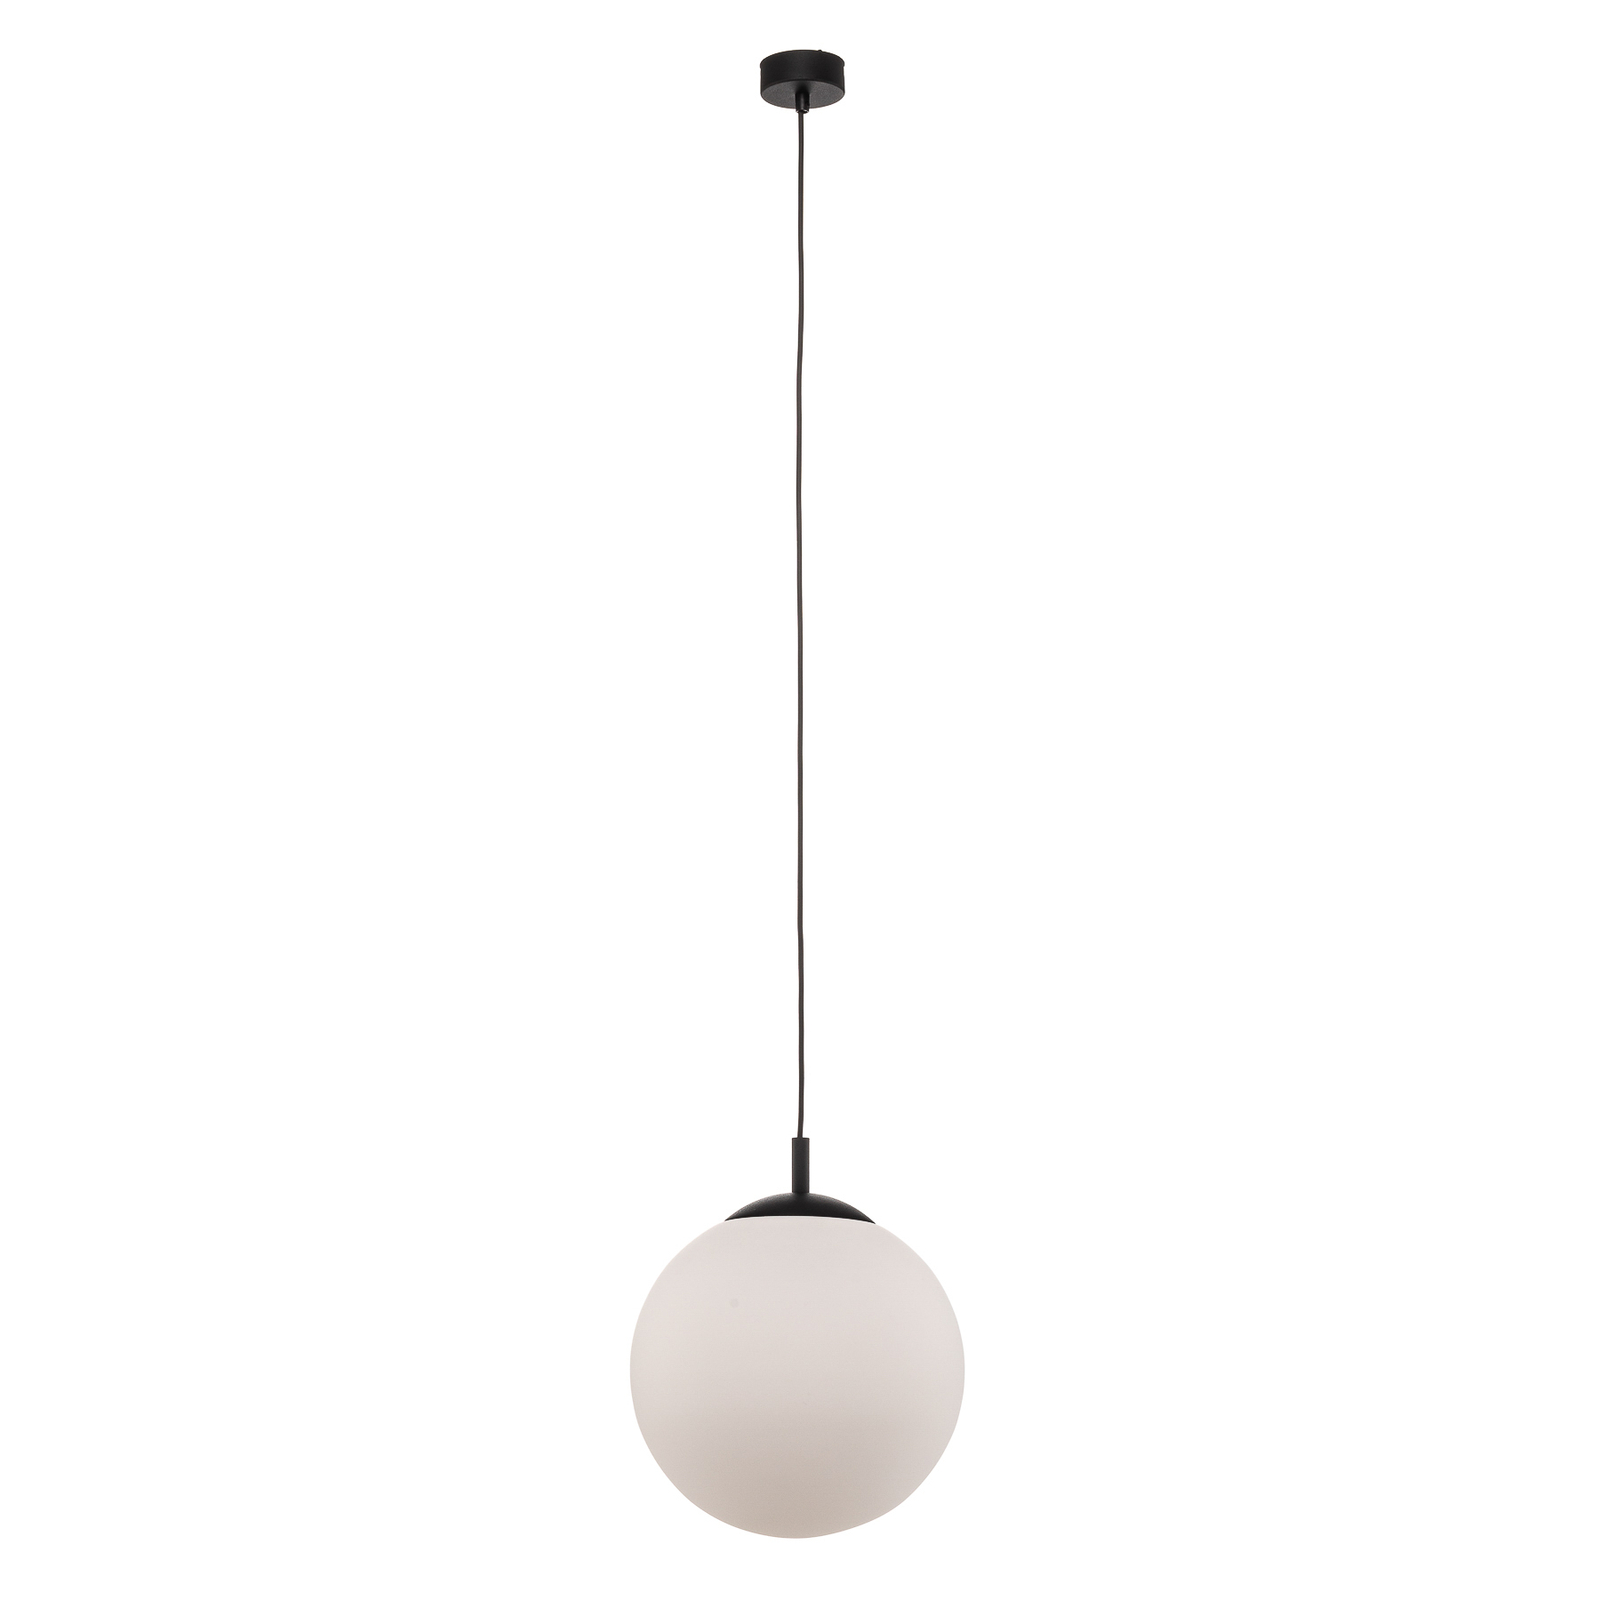 Maxi pendant light, Ø 30 cm, 1-bulb, glass shade